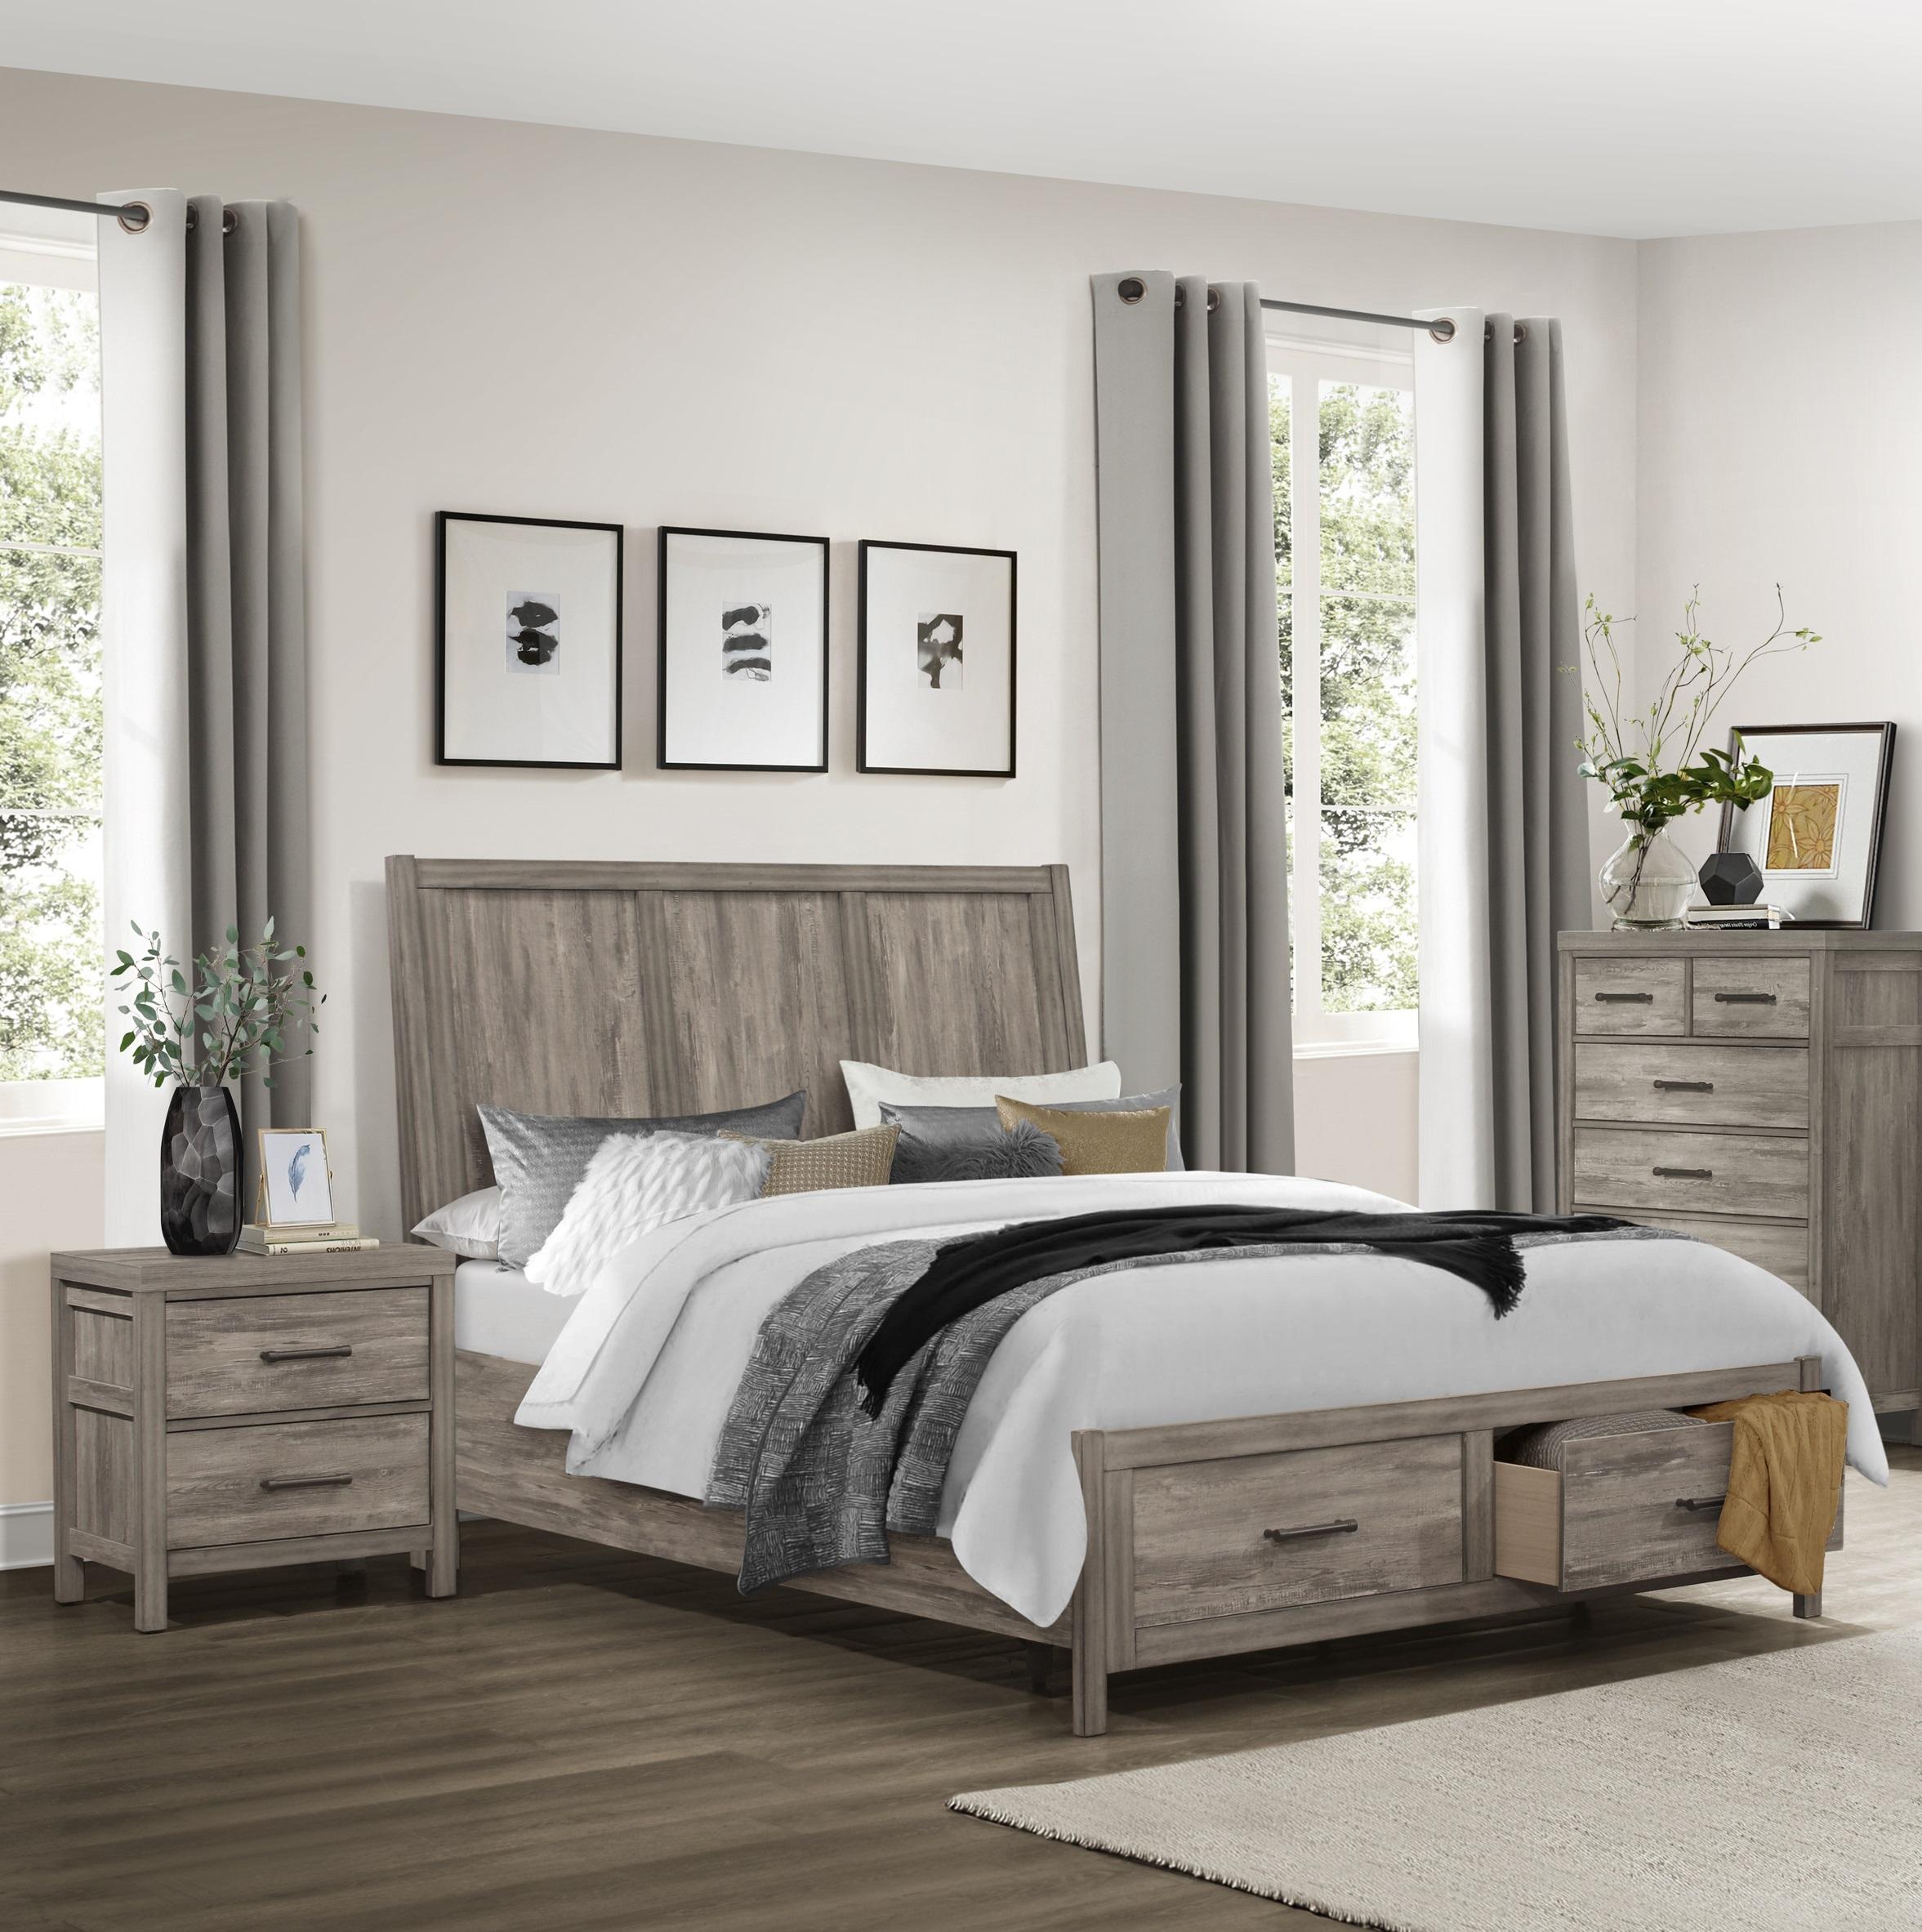 

    
Transitional Weathered Gray Wood Queen Bedroom Set 3pcs Homelegance 1526-1* Bainbridge
